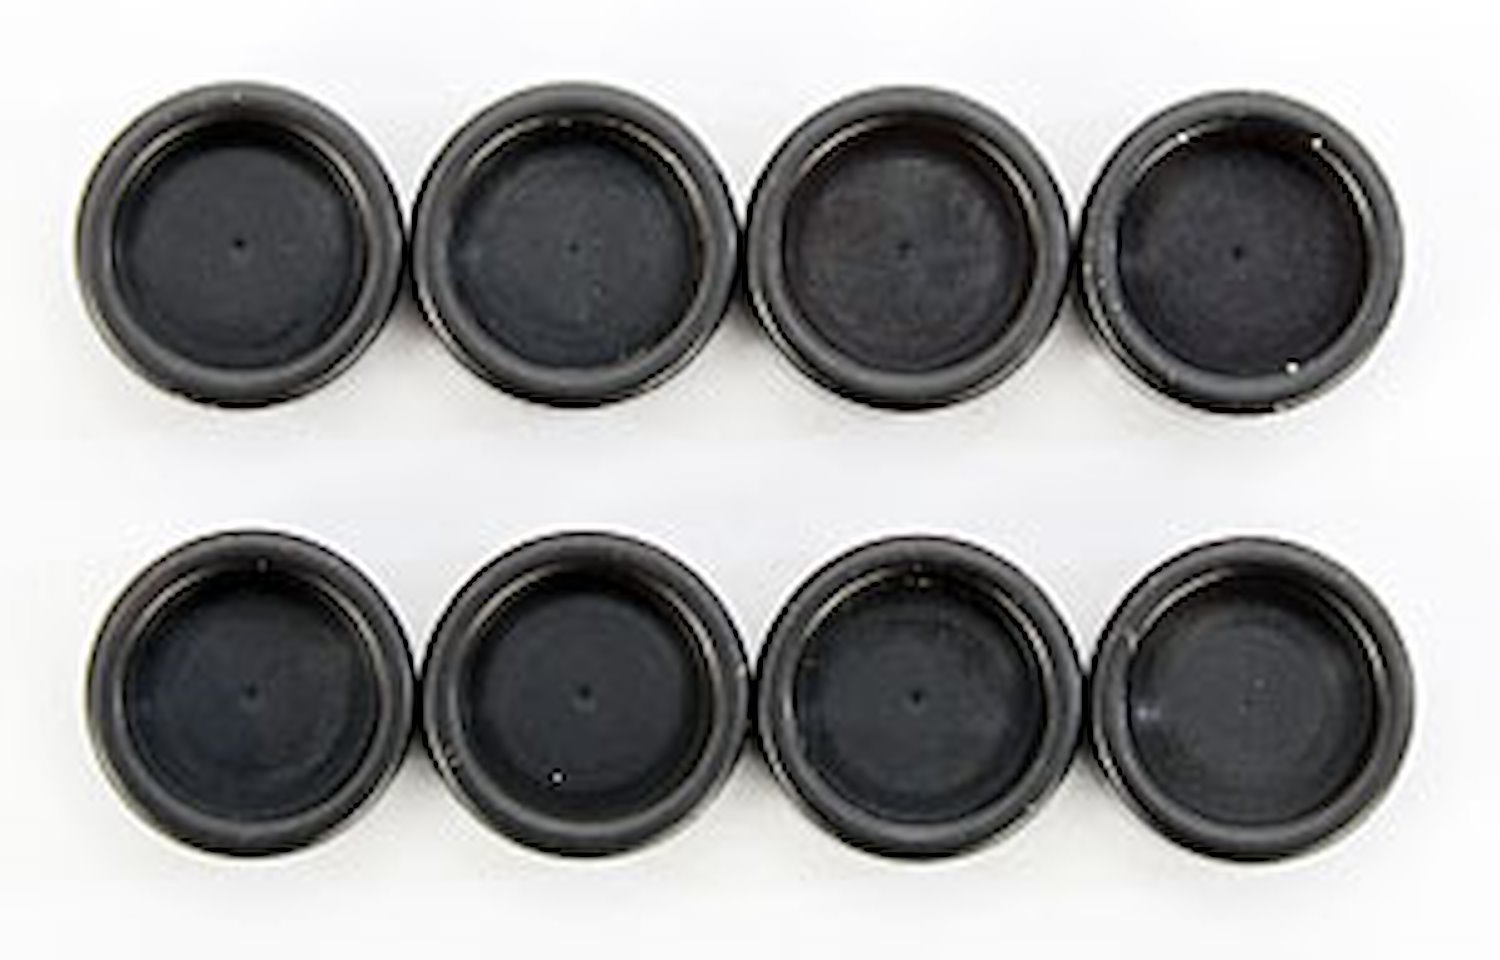 Standard Valve Lash Caps, 8/pkg 5.5mm Valve Stems